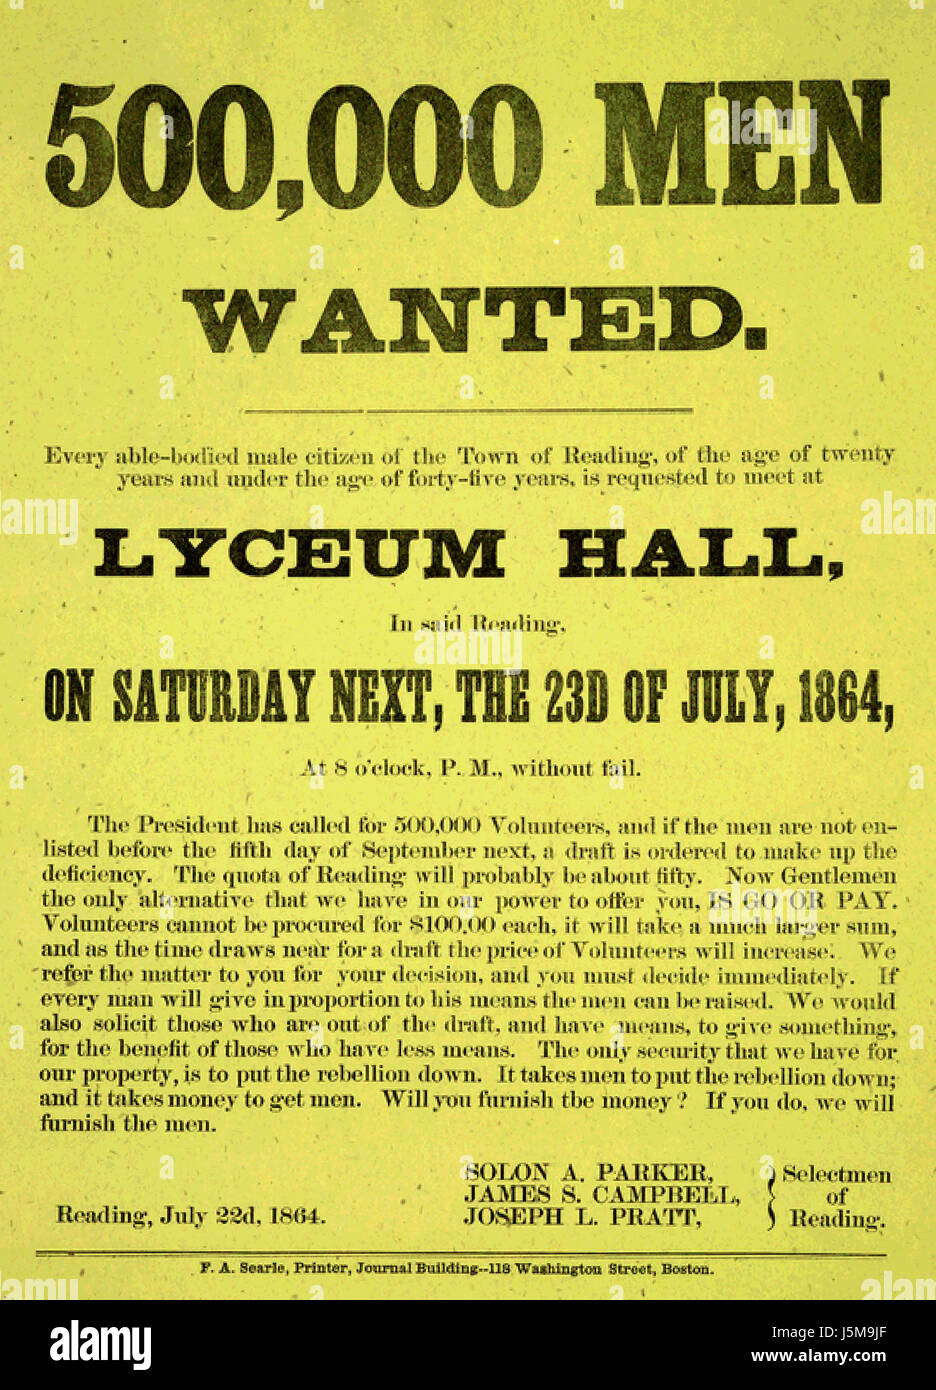 500,000 Men Wanted - Meet at Lyceum Hall, Reading, Pennsylvania - American Civil War Recruiting Poster, 1864 Stock Photo